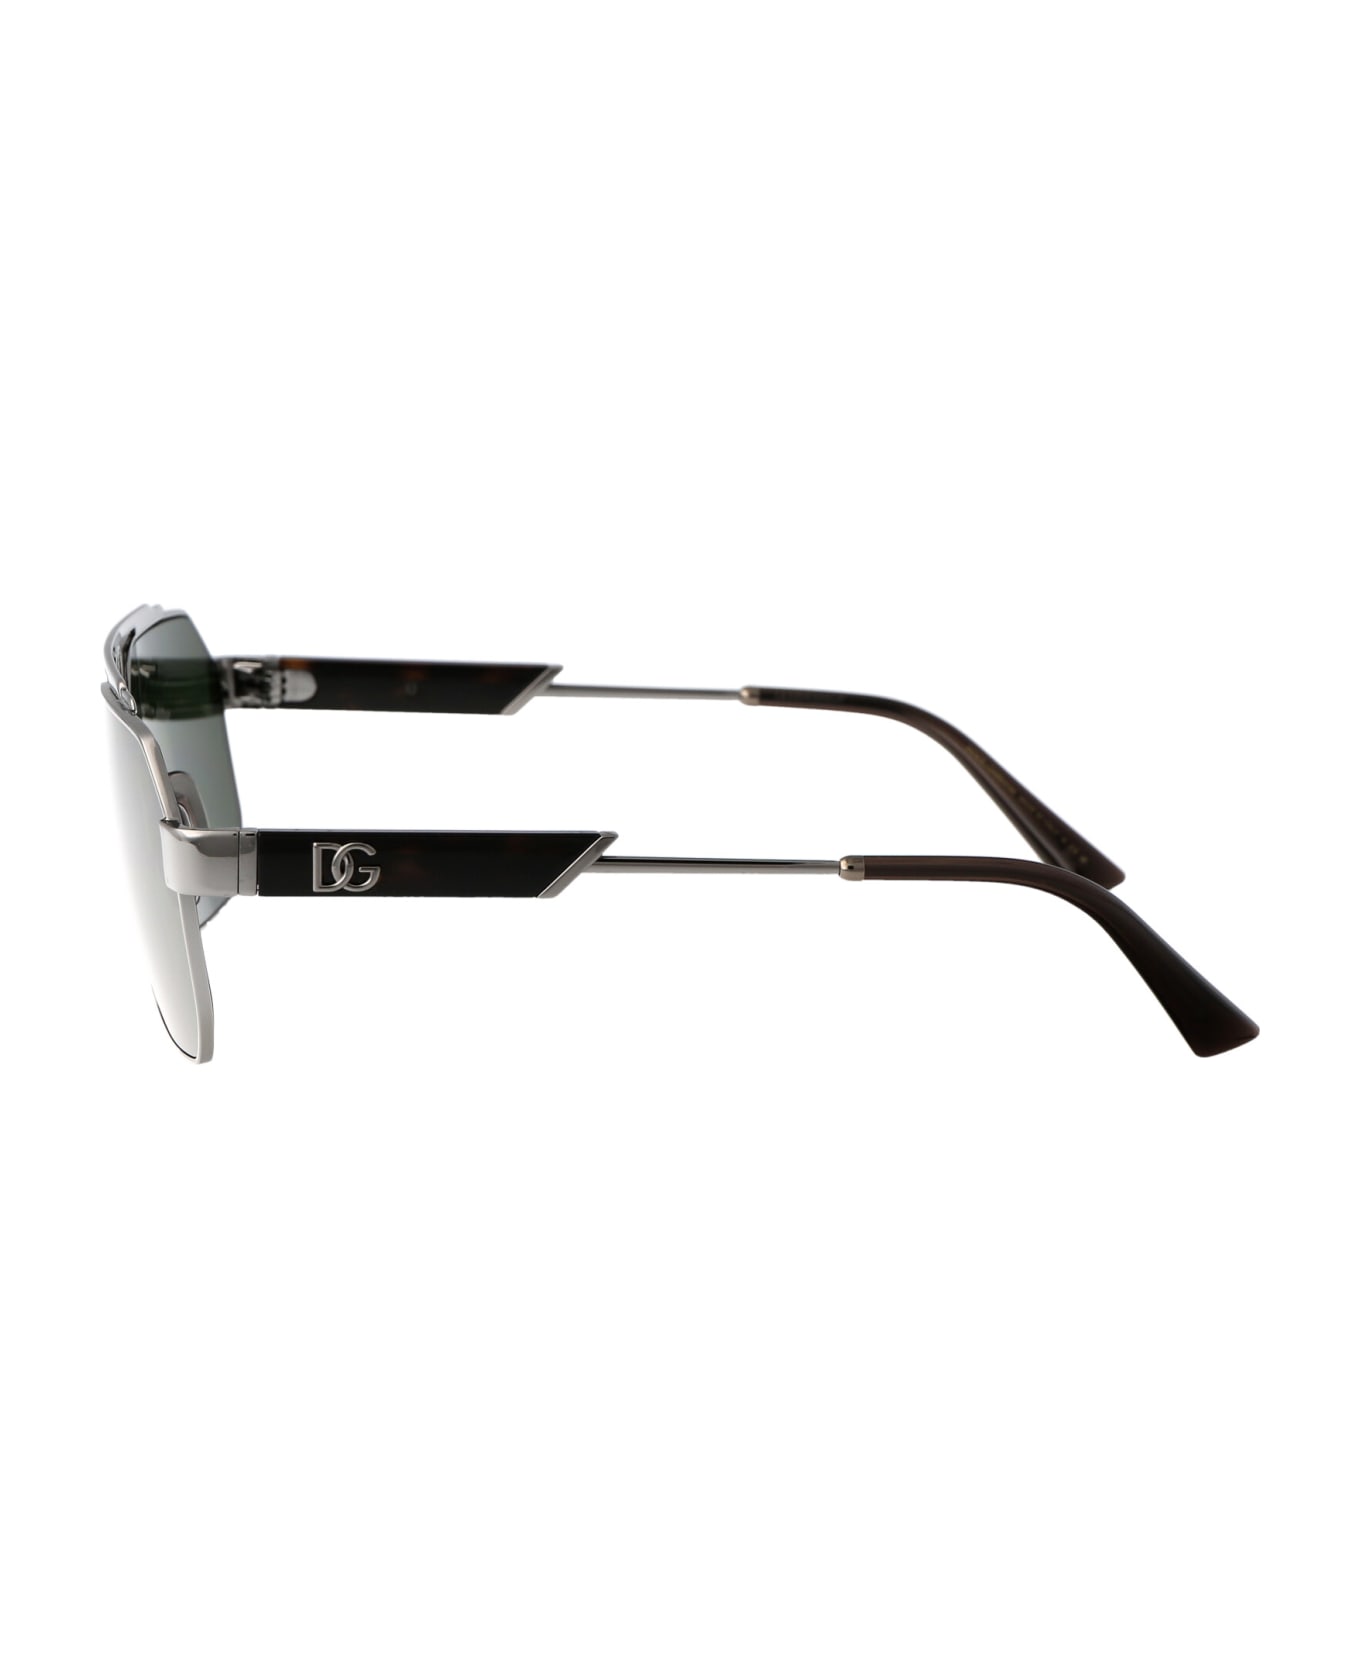 Dolce & Gabbana Eyewear 0dg2294 Sunglasses - 04/71 Gunmetal